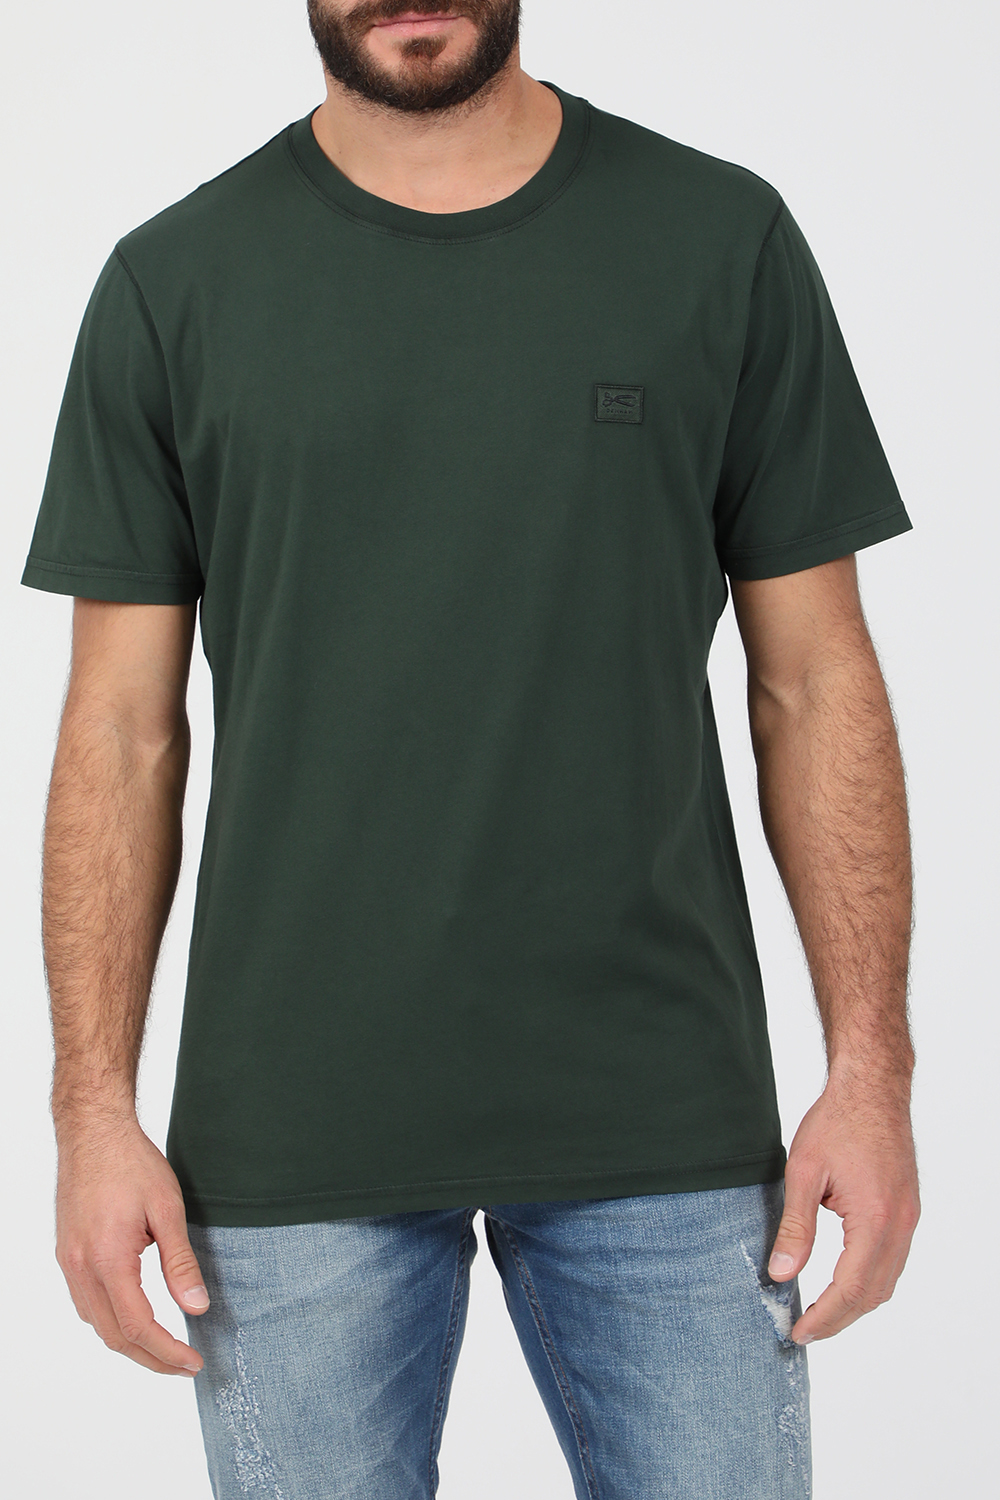 DENHAM – Ανδρικό t-shirt DENHAM APPLIQ πράσινο 1823107.0-0101